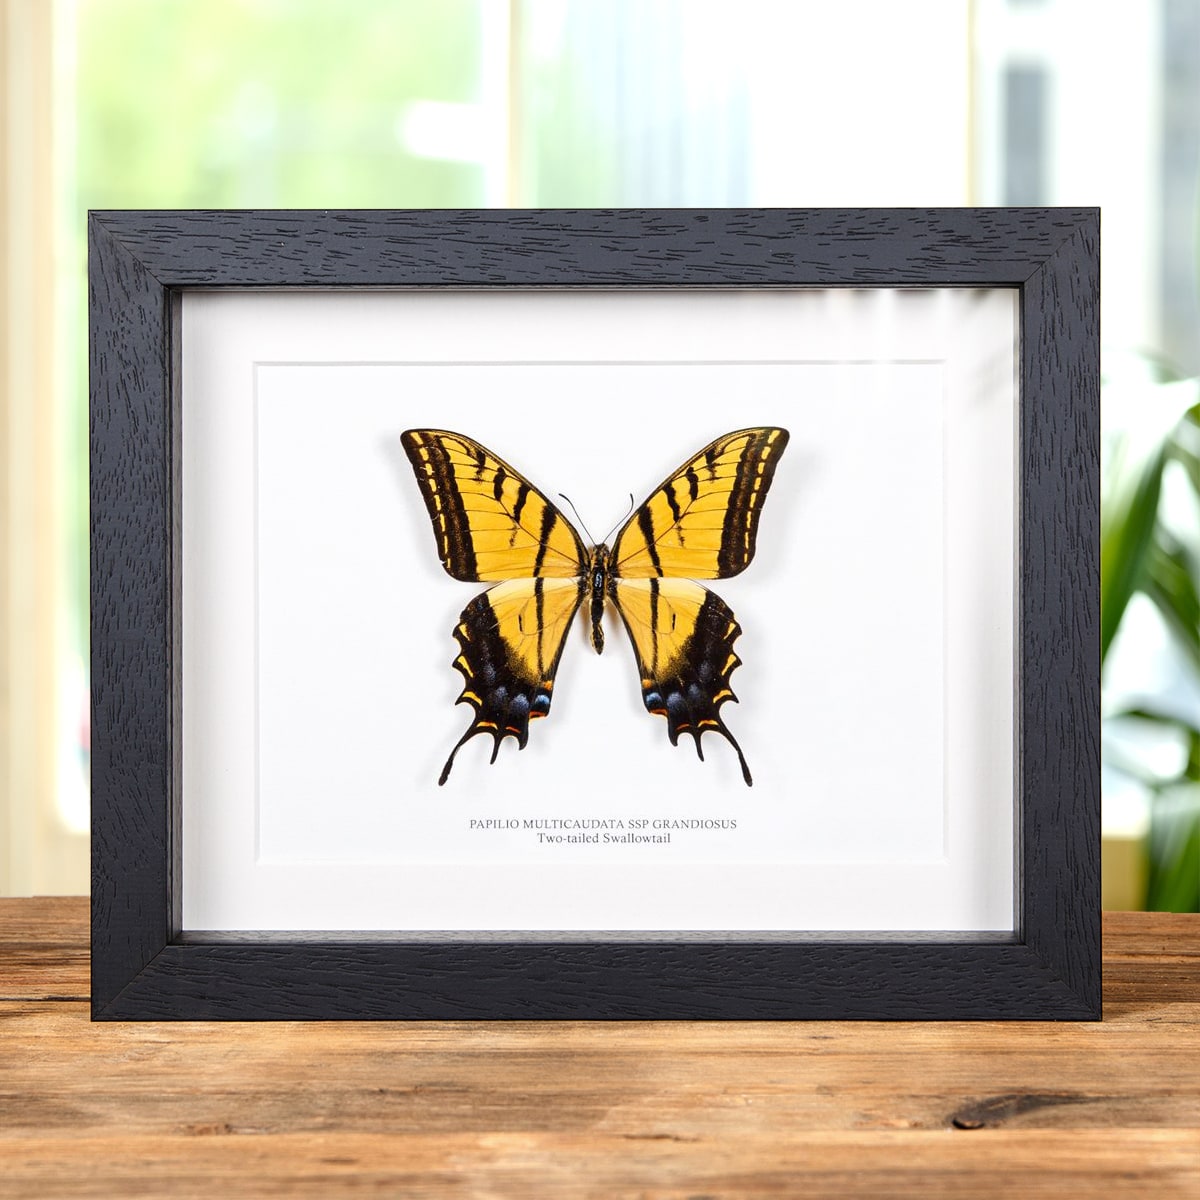 Minibeast Two-tailed Swallowtail in Box Frame (Papilio multicaudata ssp grandiosus)